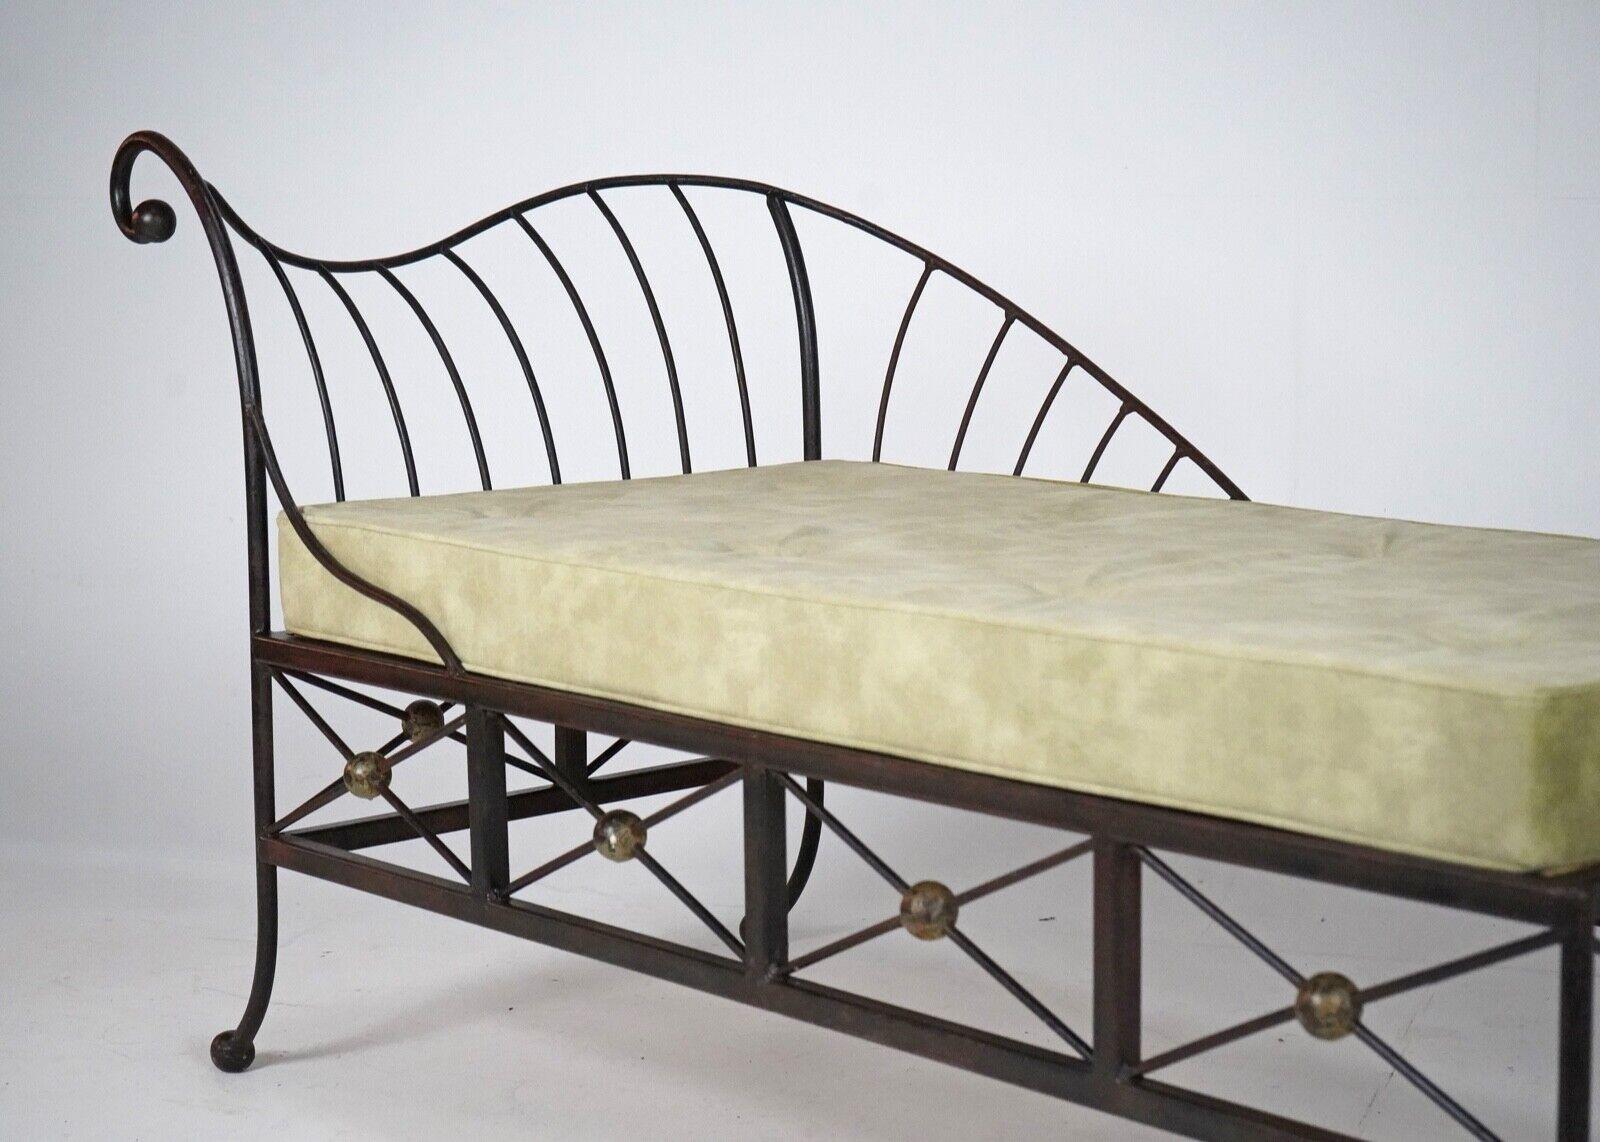 Vintage Französisch Box Stahl Metall Day Bed, Sun Lounger, Chaise Lounge Green Seat 1